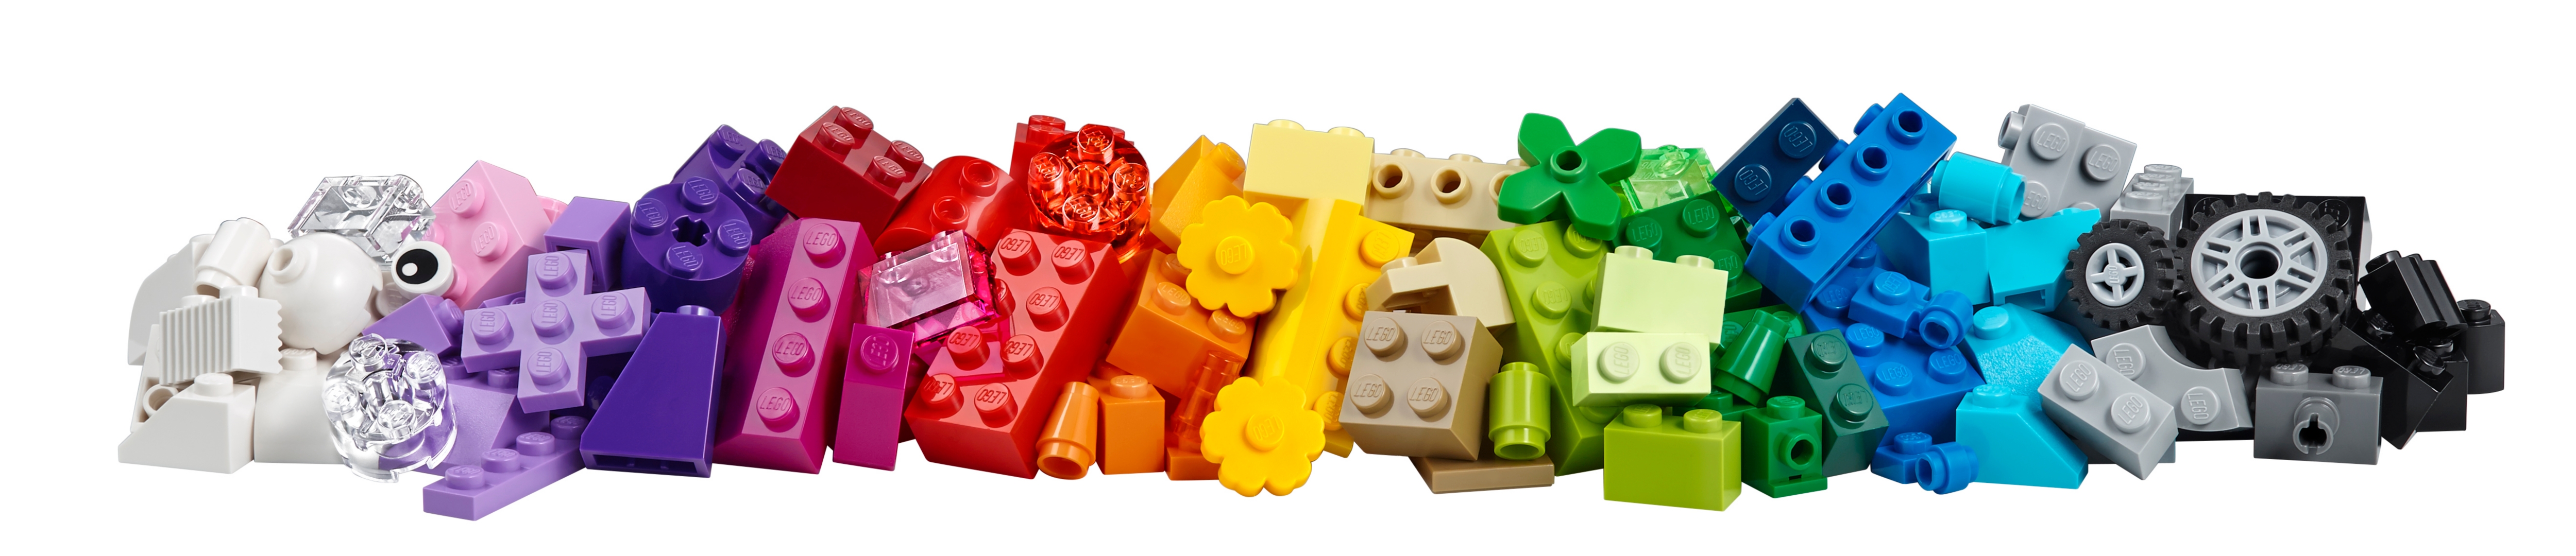 Stavebnice LEGO Tvořivé kostky obsahuje spoustu barevných a praktických dílků